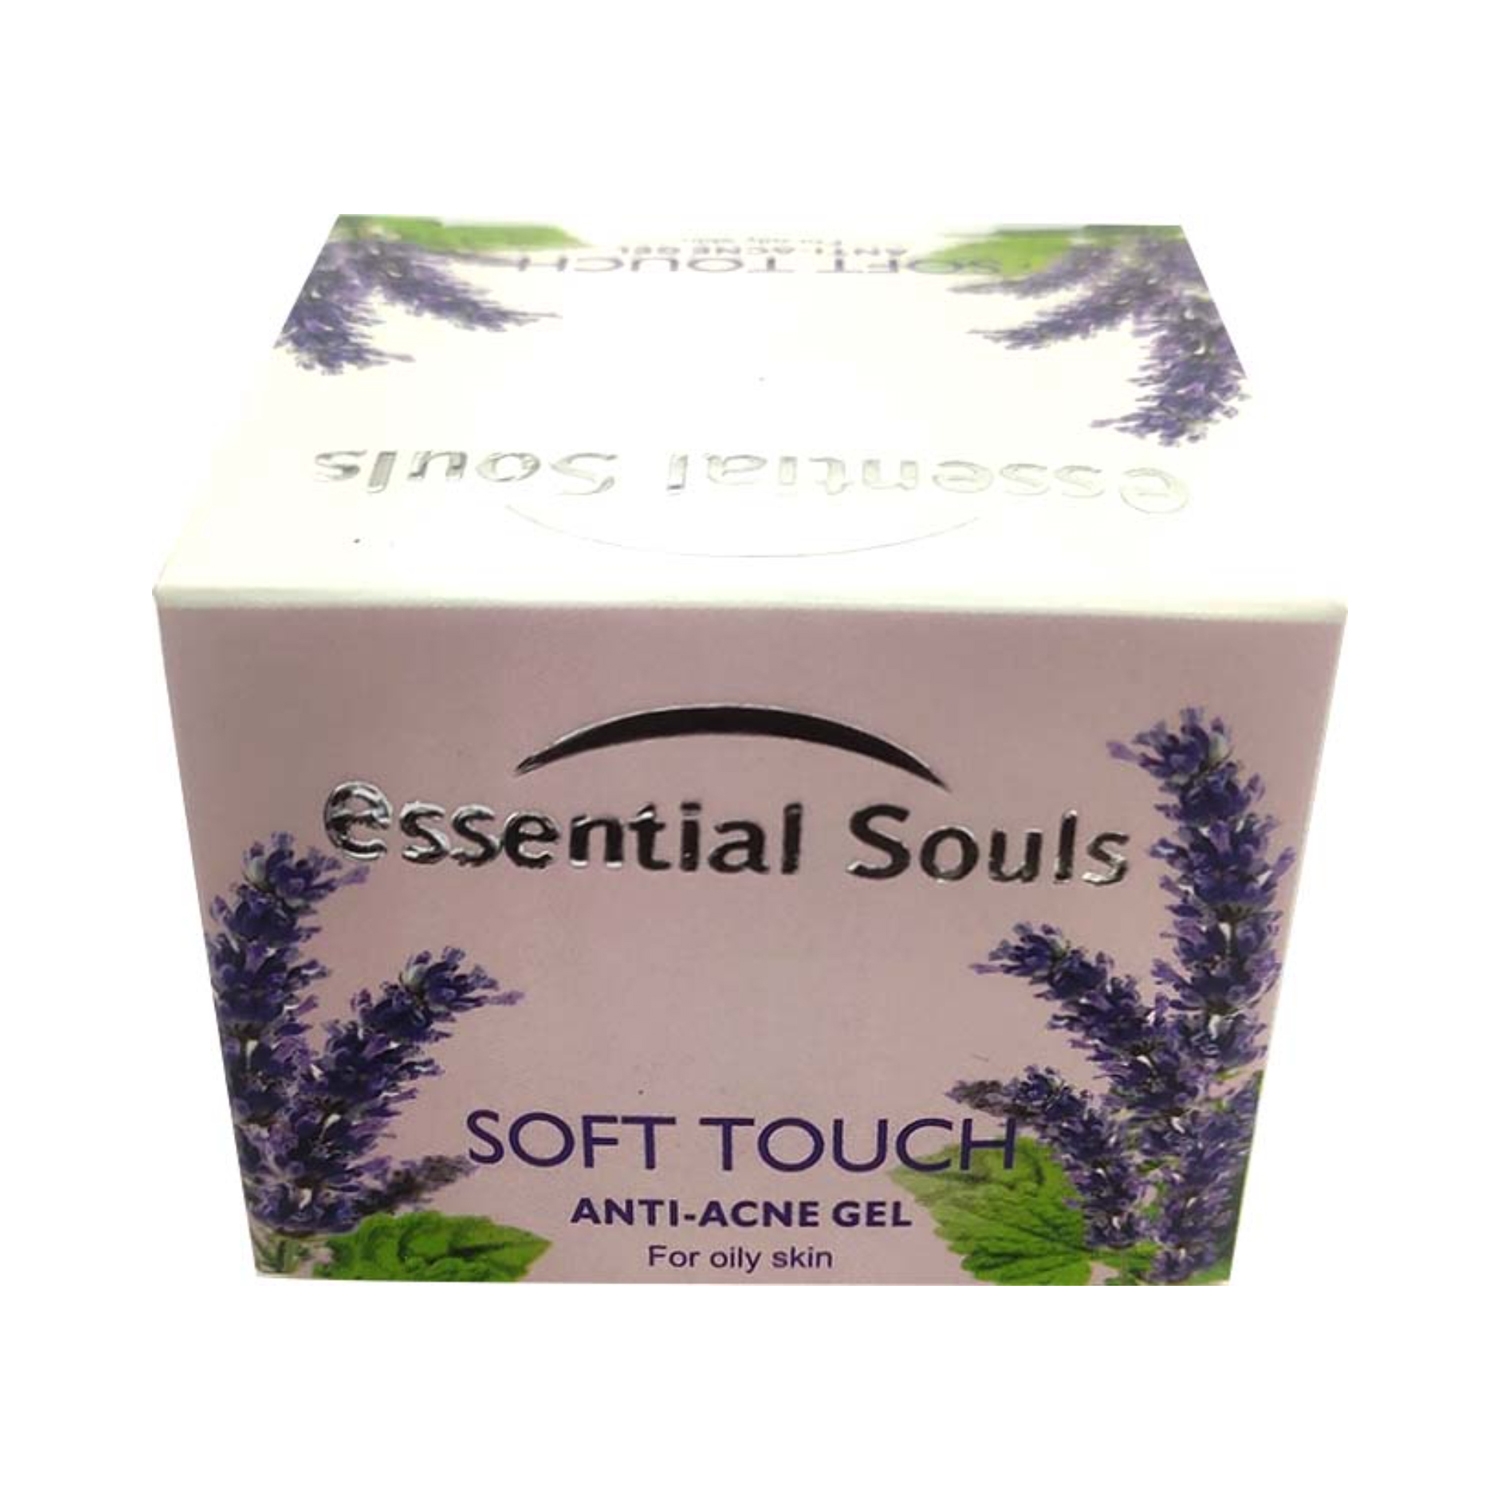 Essential Souls | Essential Souls Soft Touch Anti Acne Gel (50g)